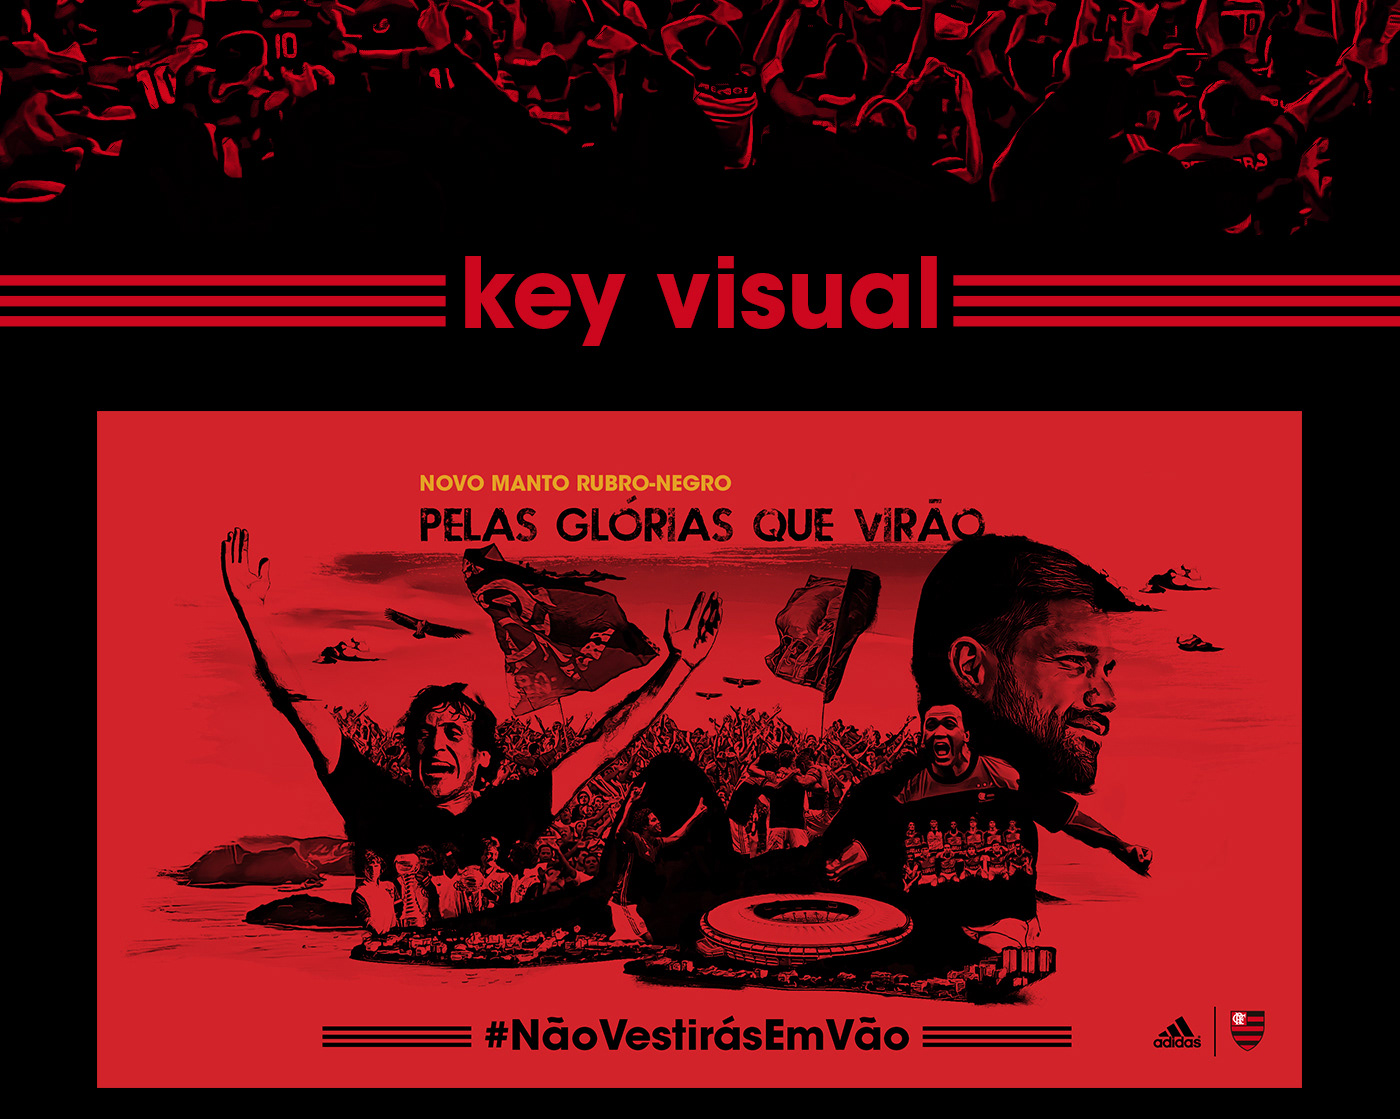 flamengo adidas social lançamento camisa futebol soccer football libertadores live markting social media